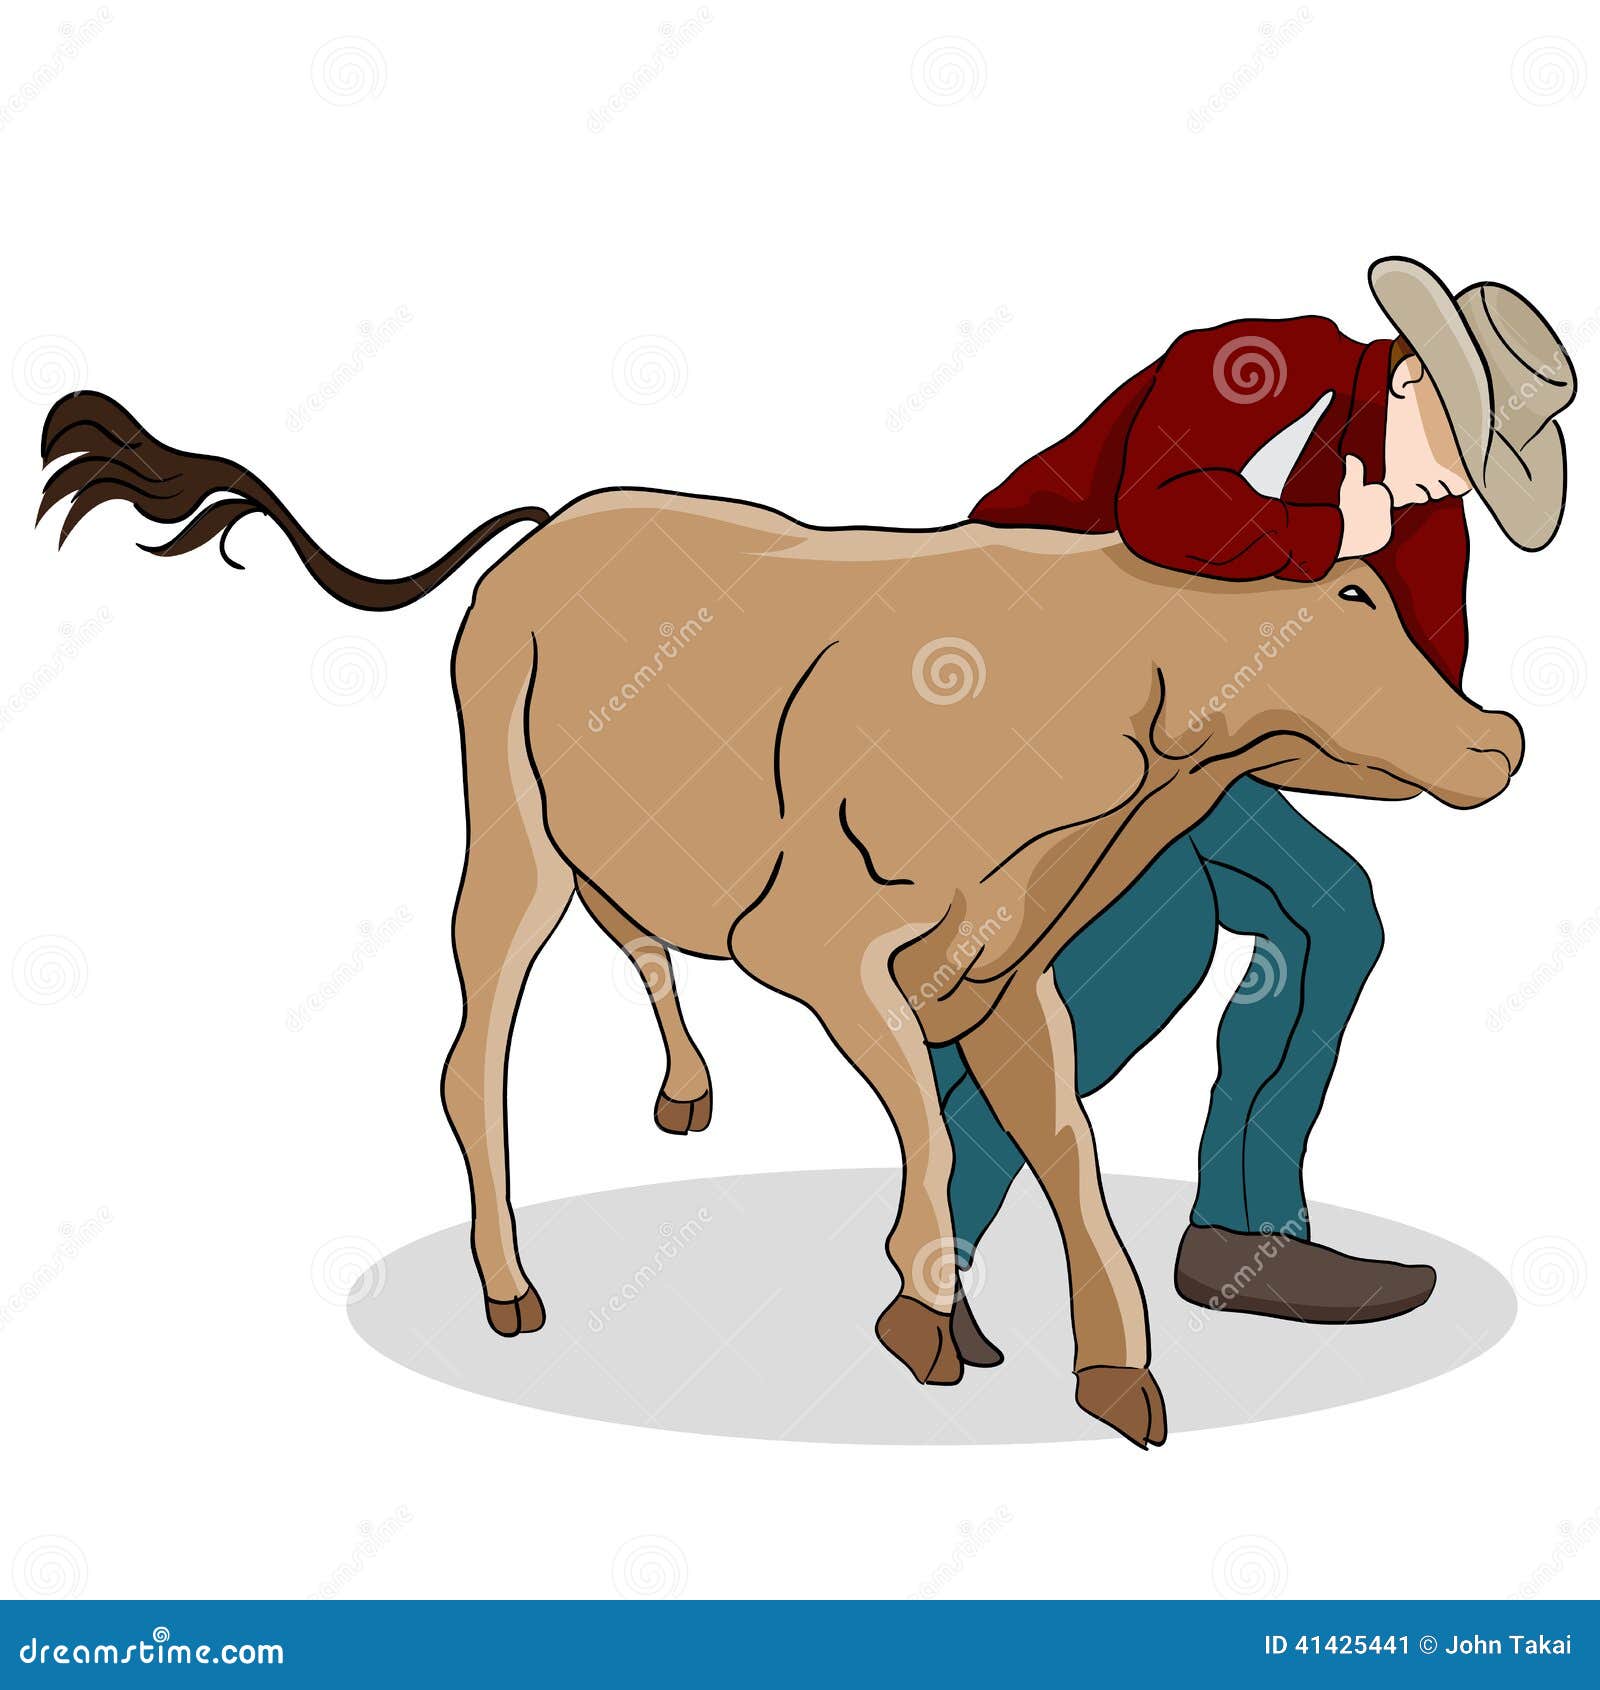 cowboy wrangling a calf